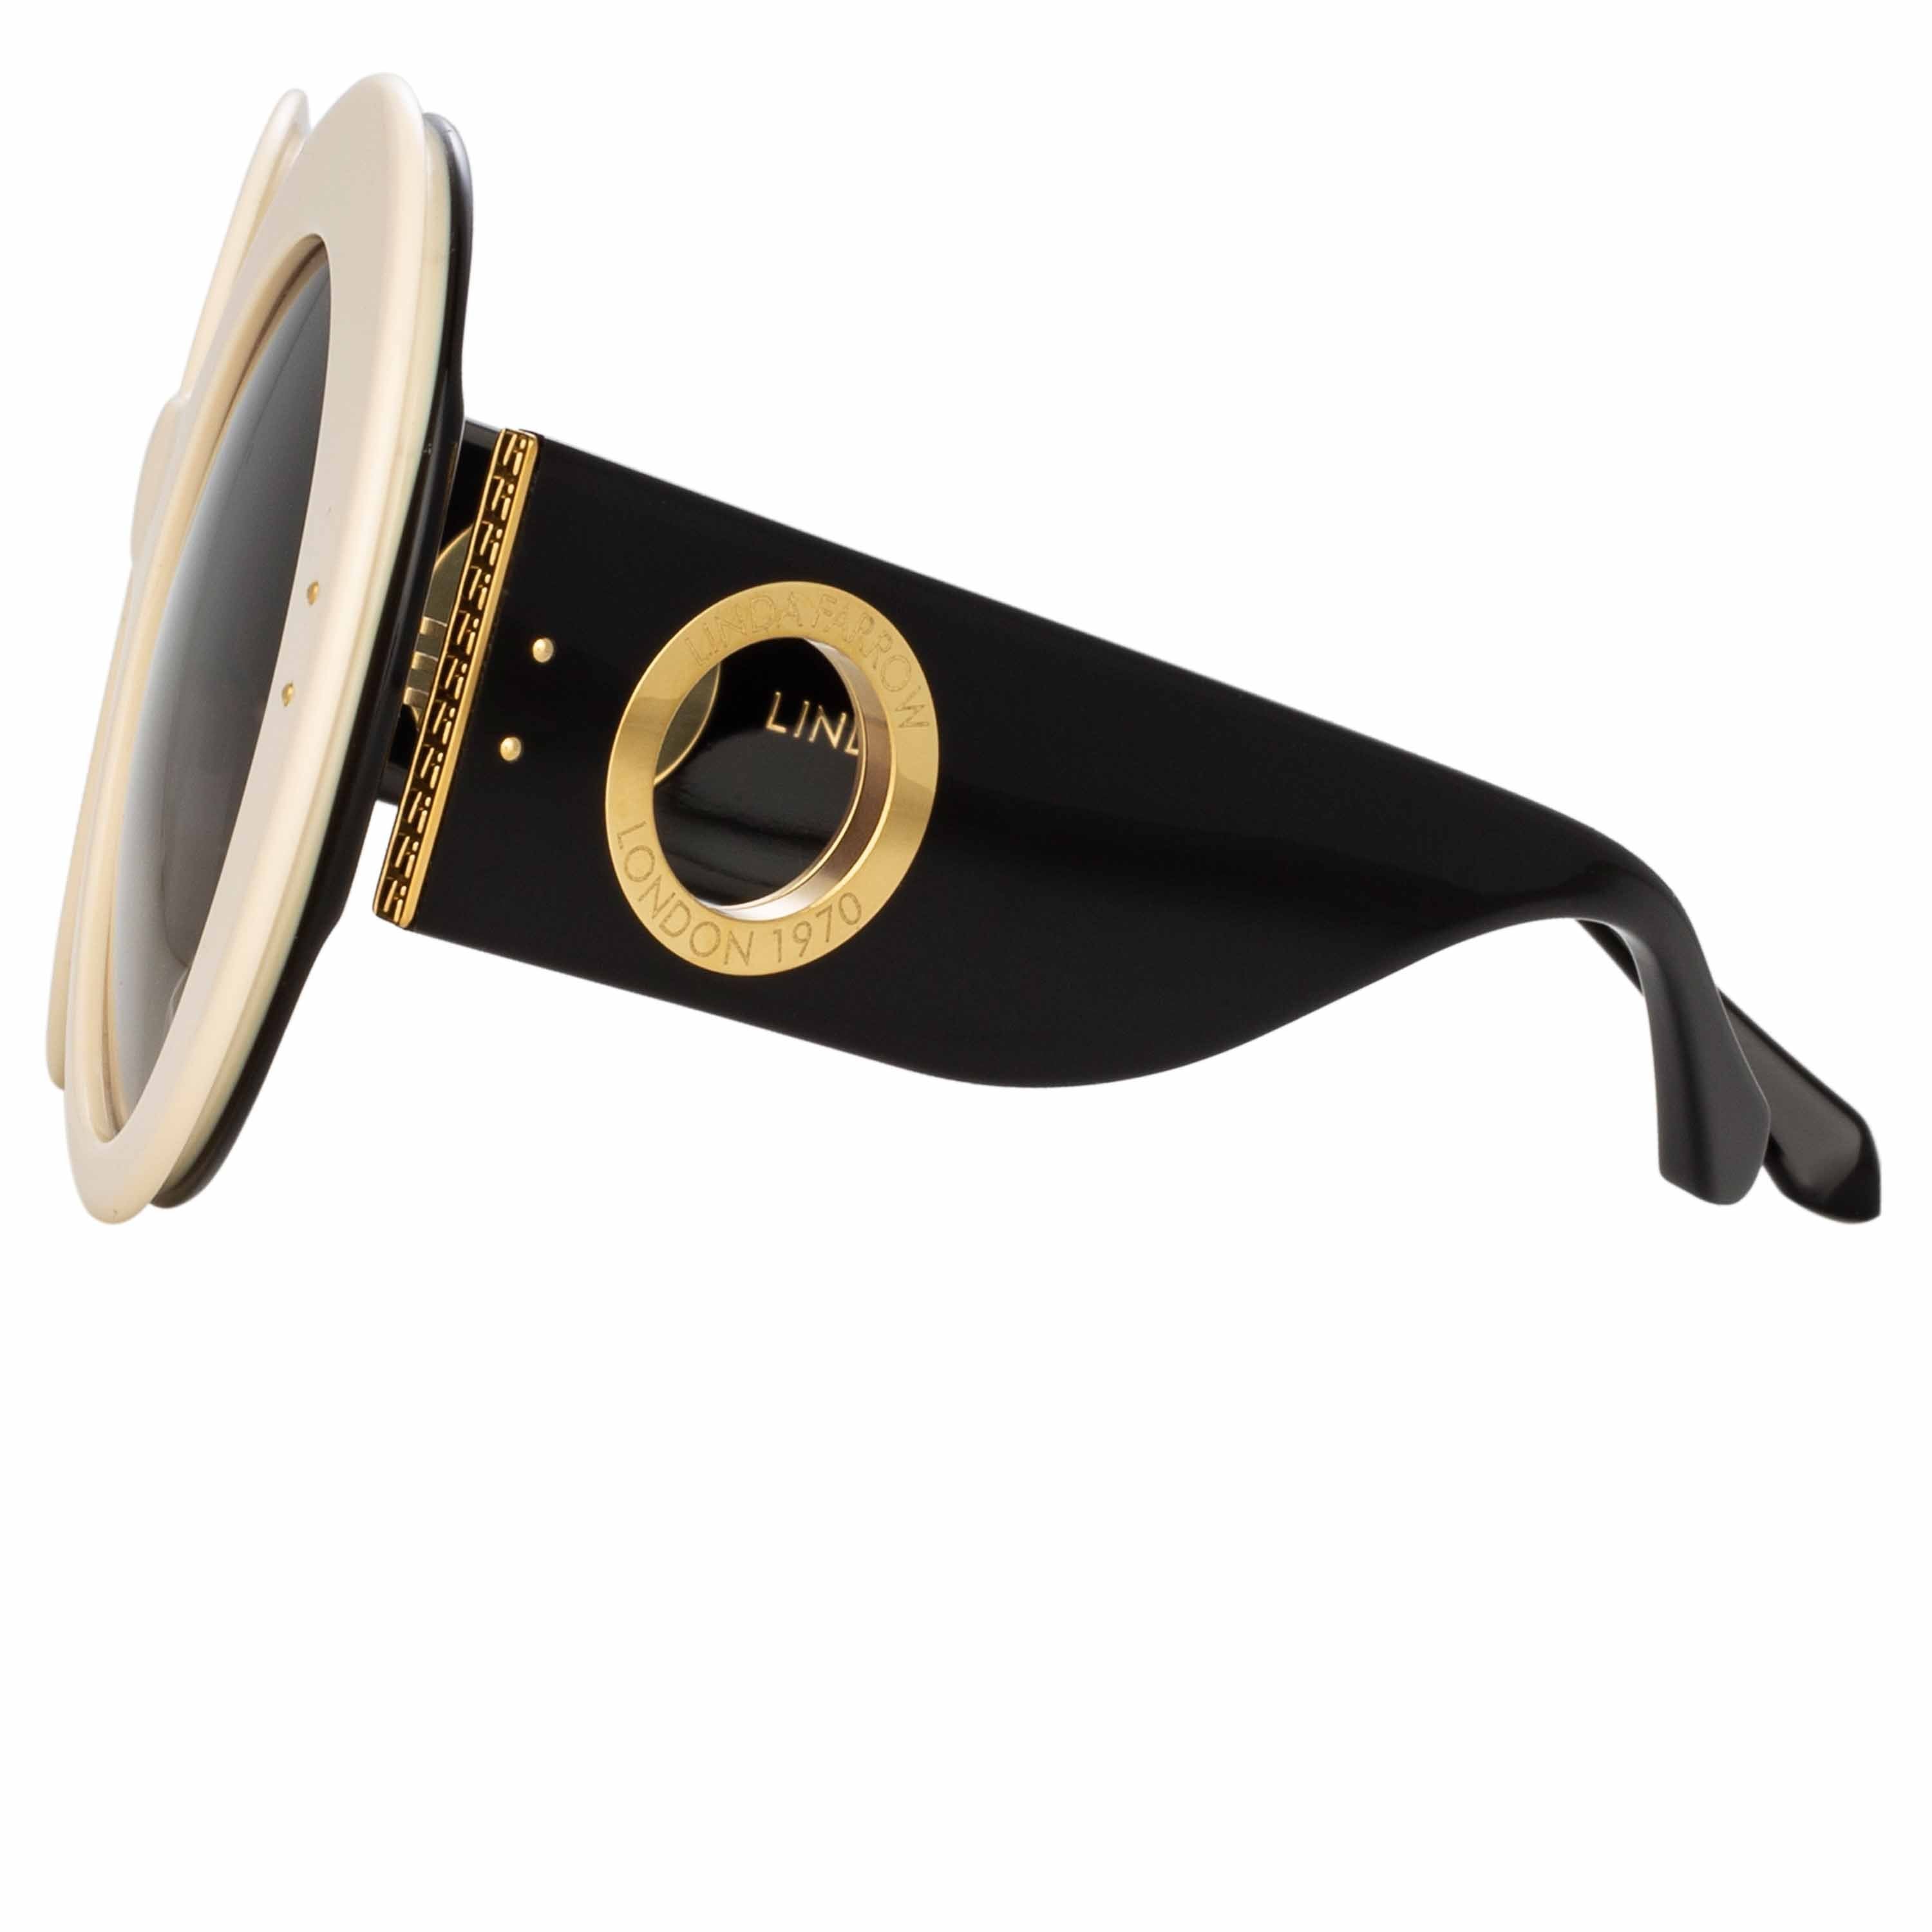 Color_LFL1120C2SUN - Donyale Oversized Sunglasses in Cream